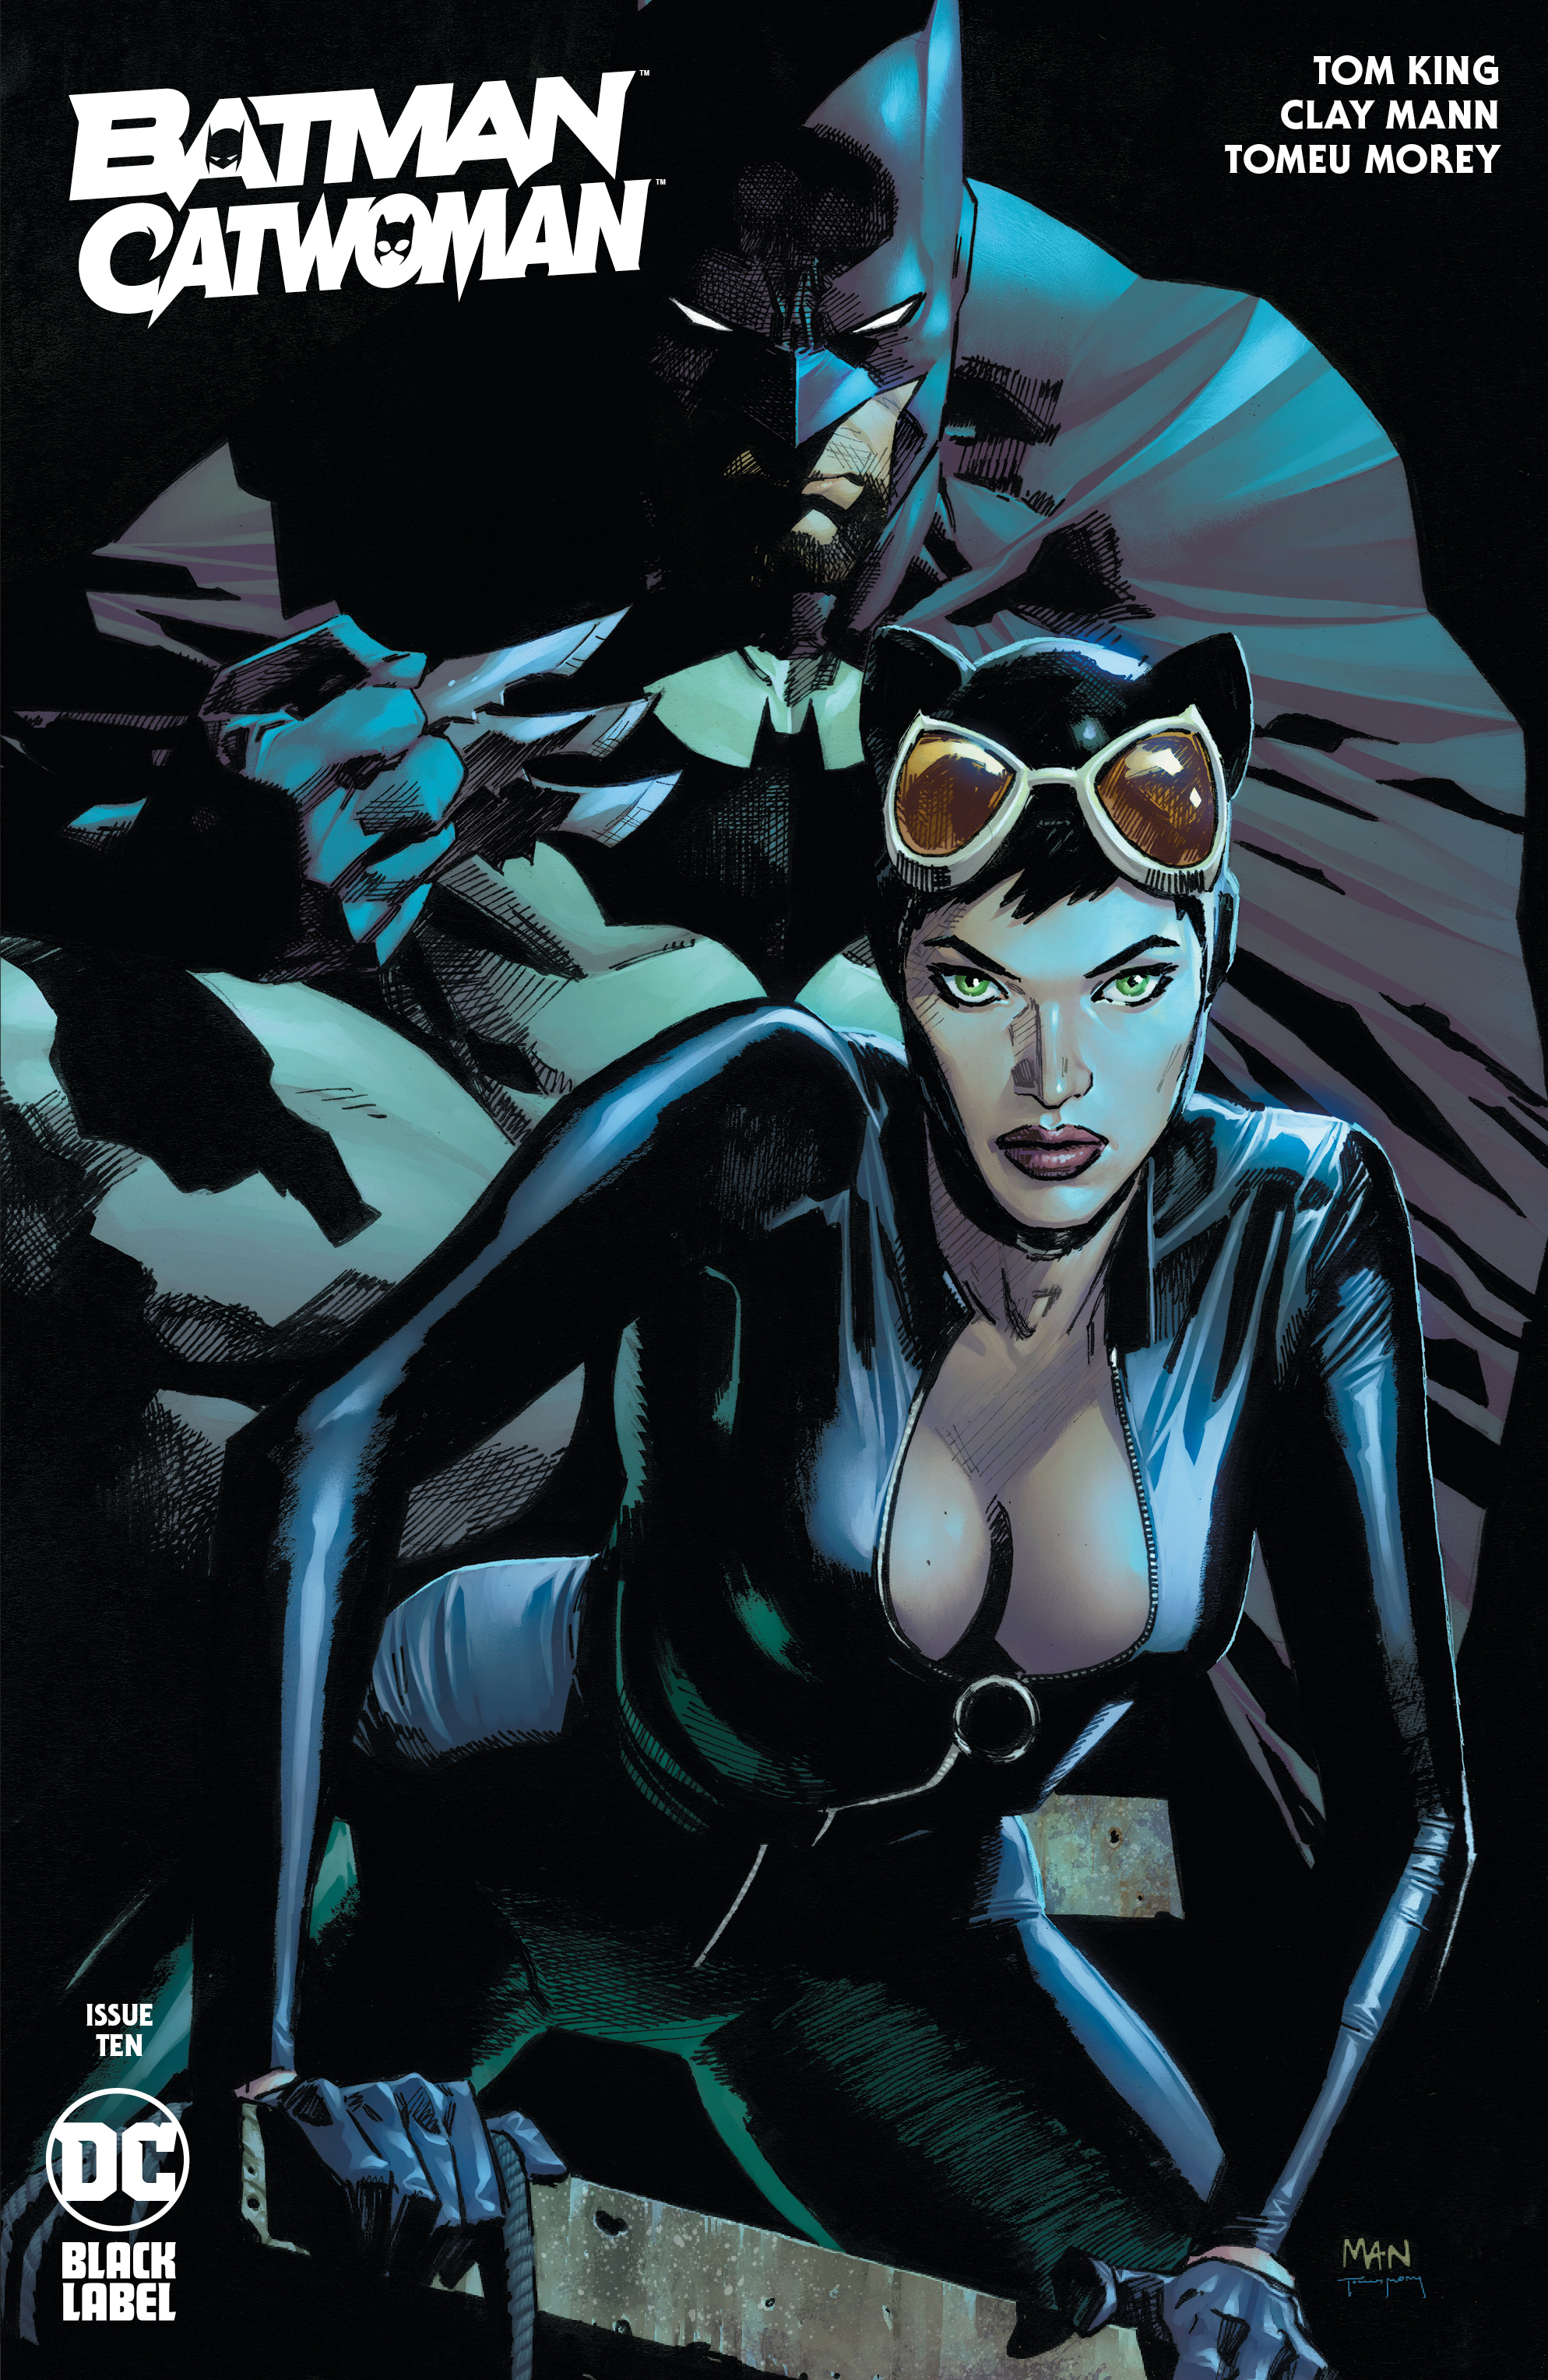 Batman Catwoman #10 (Of 12) Cover A Clay Mann (Mature) | ComicHub